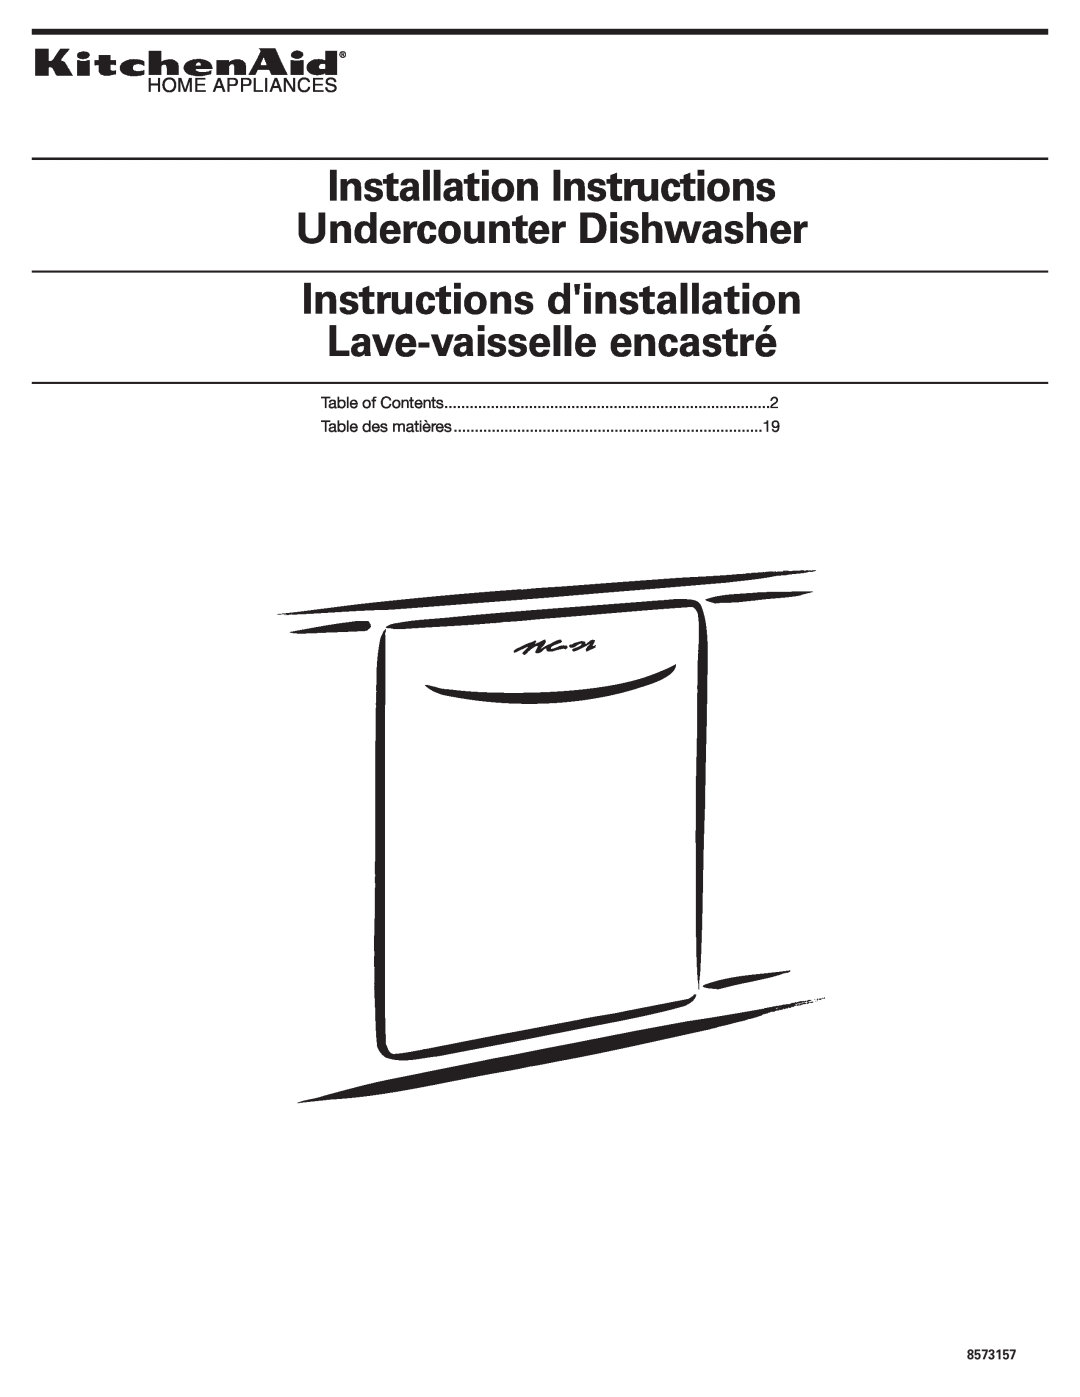 KitchenAid 8573157 installation instructions Home Appliances, Installation Instructions Undercounter Dishwasher 